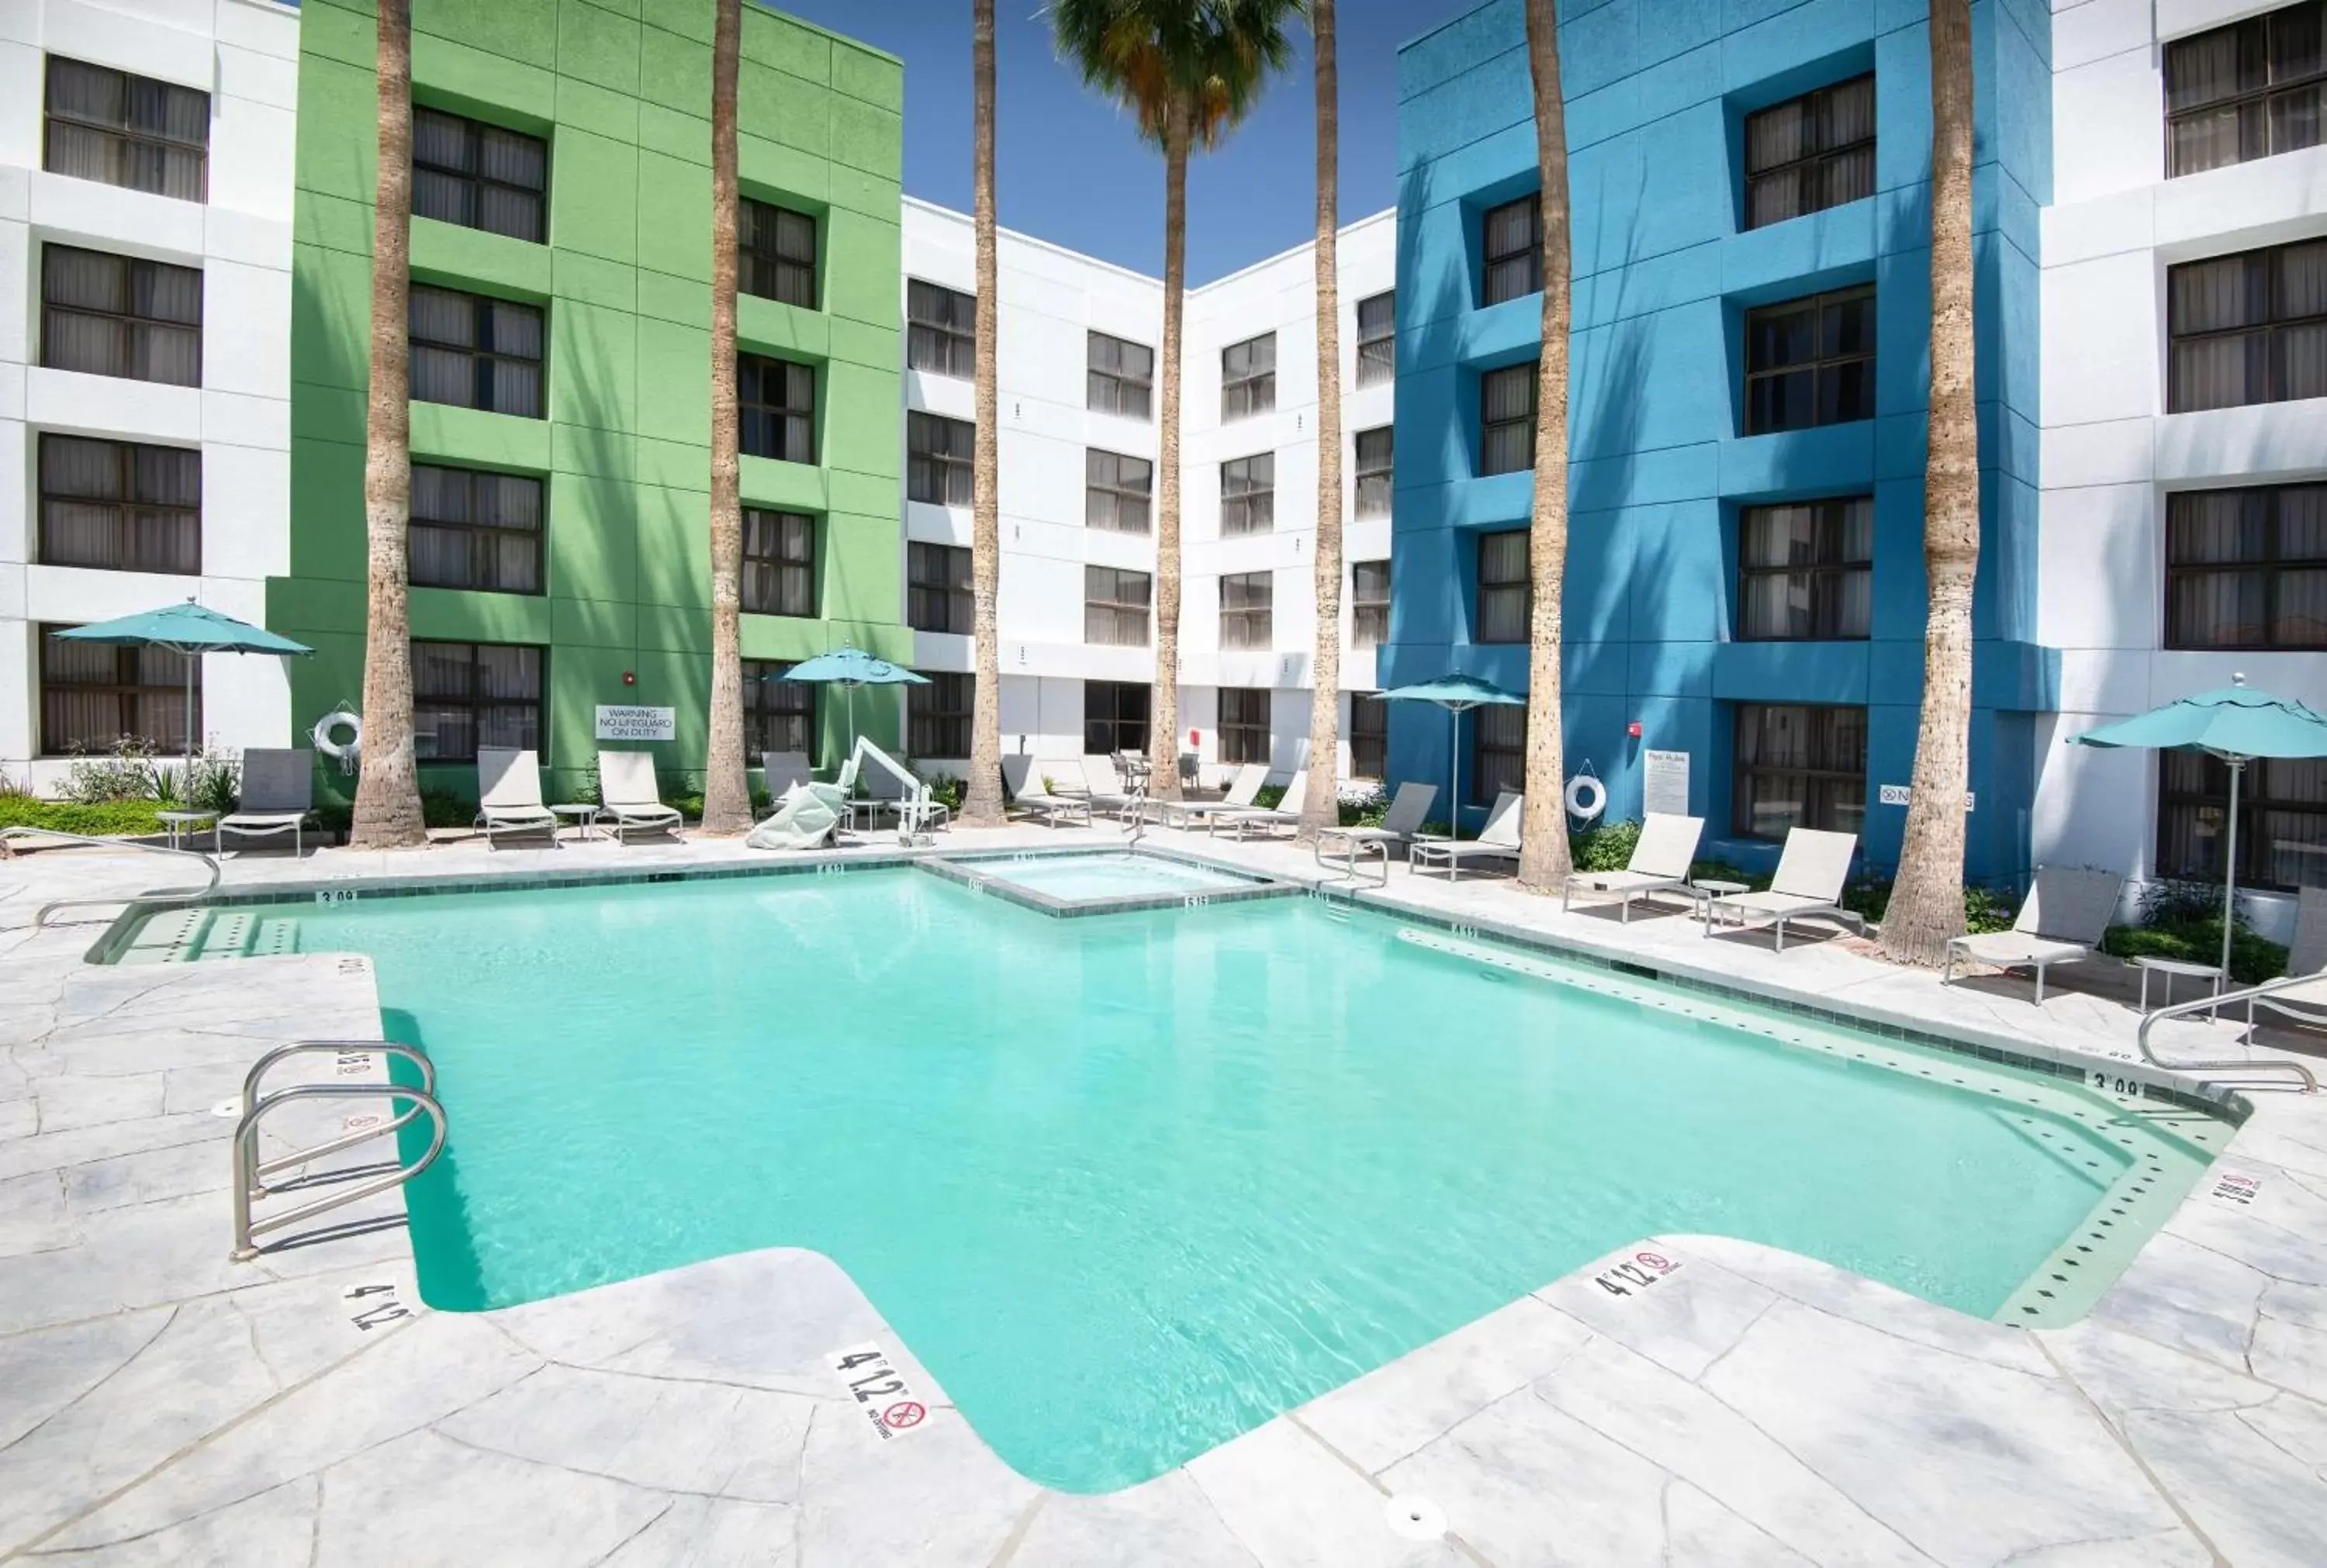 Pool view, Swimming Pool in DoubleTree by Hilton Chandler Phoenix, AZ